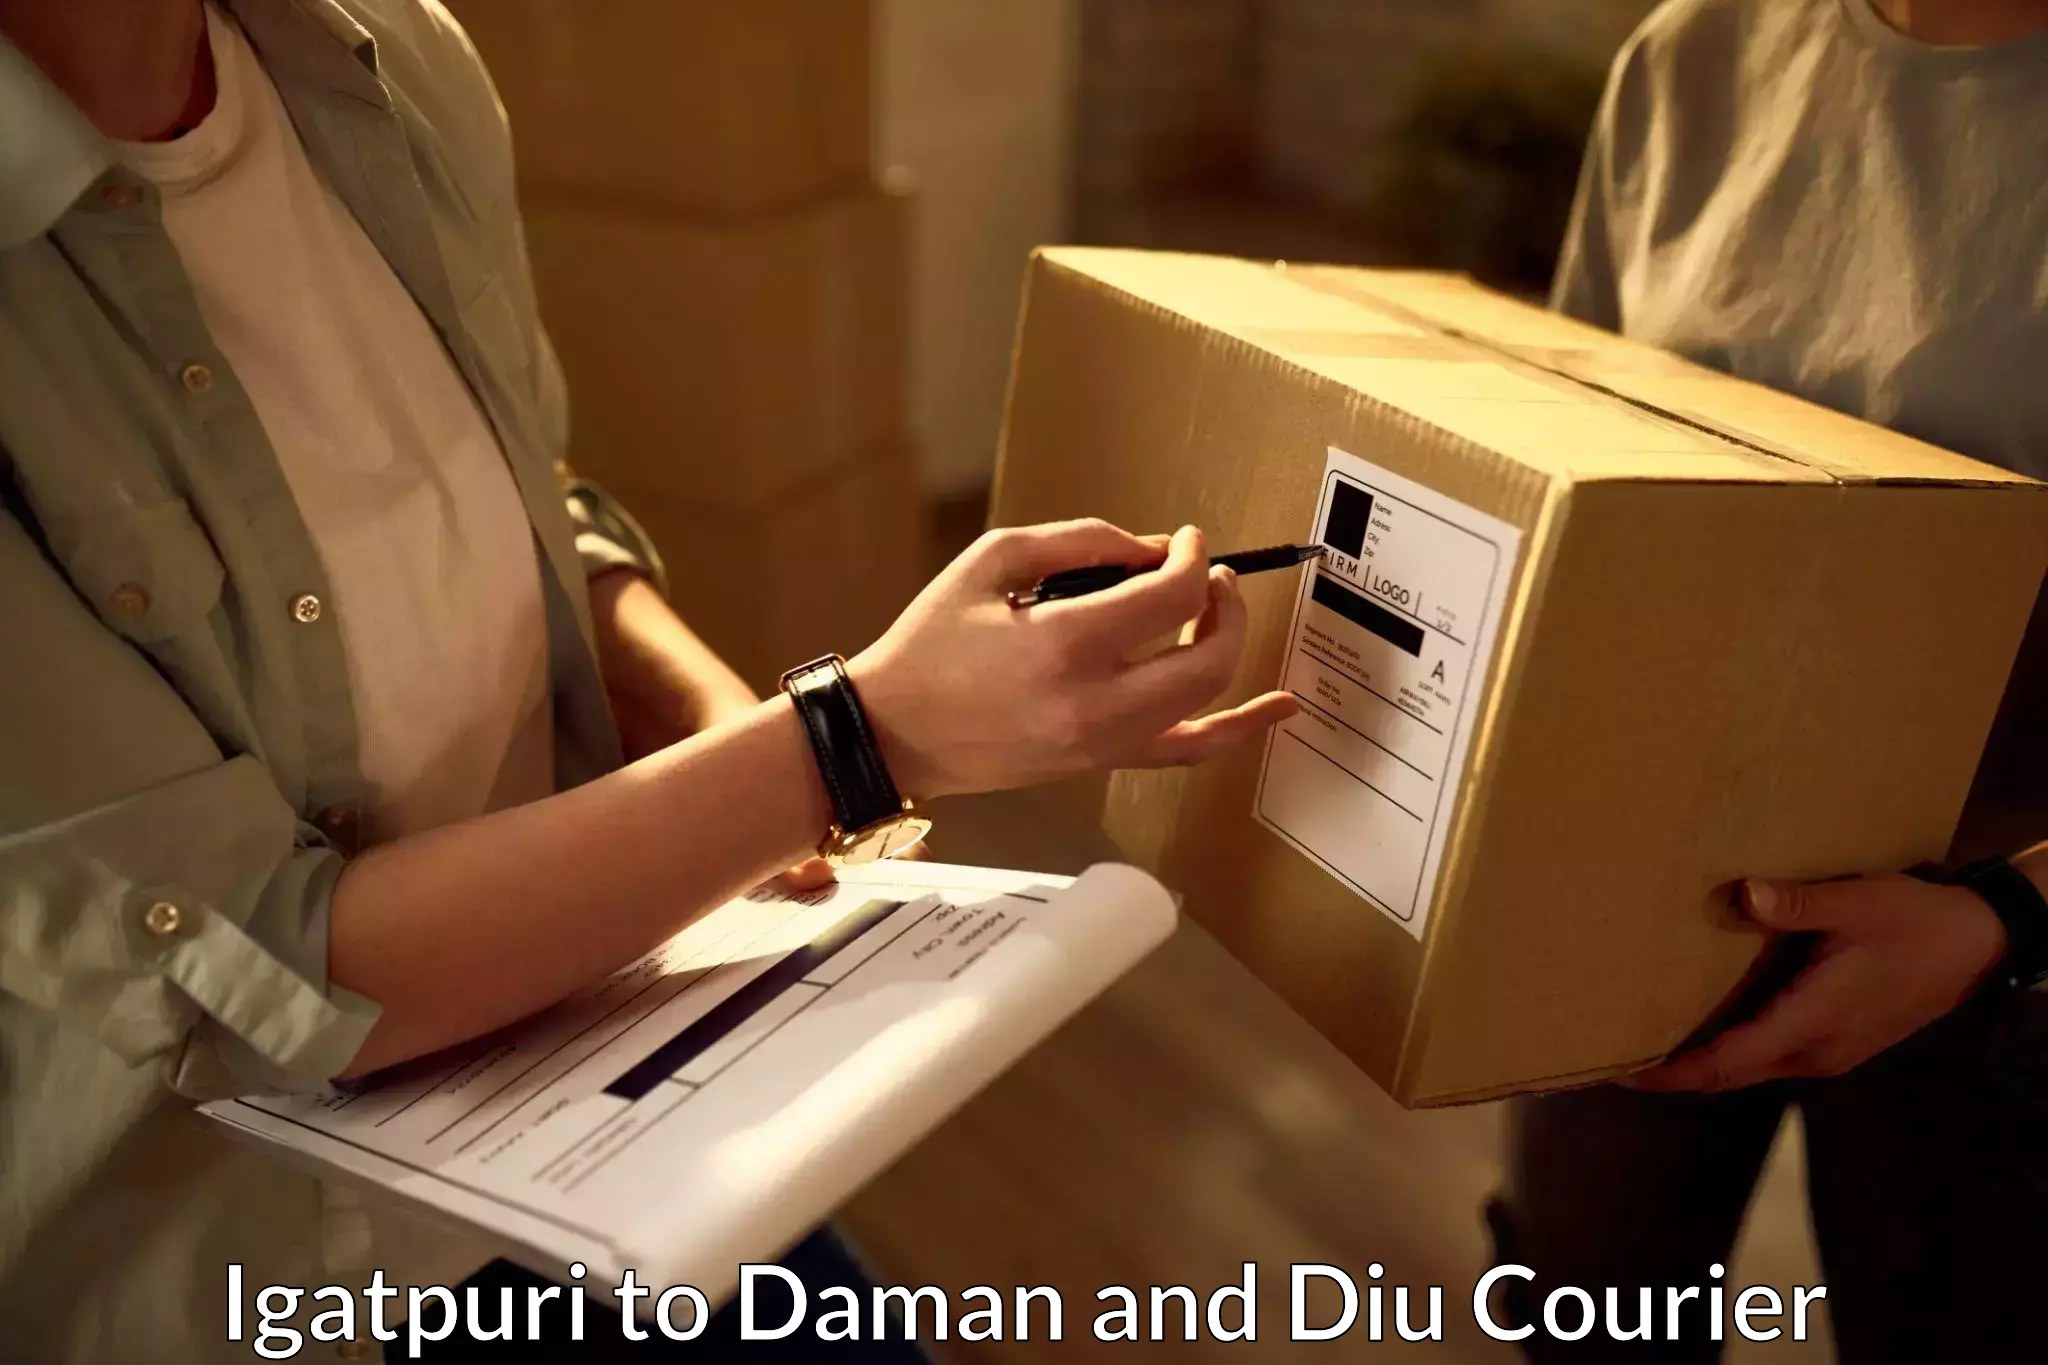 Courier service partnerships Igatpuri to Daman